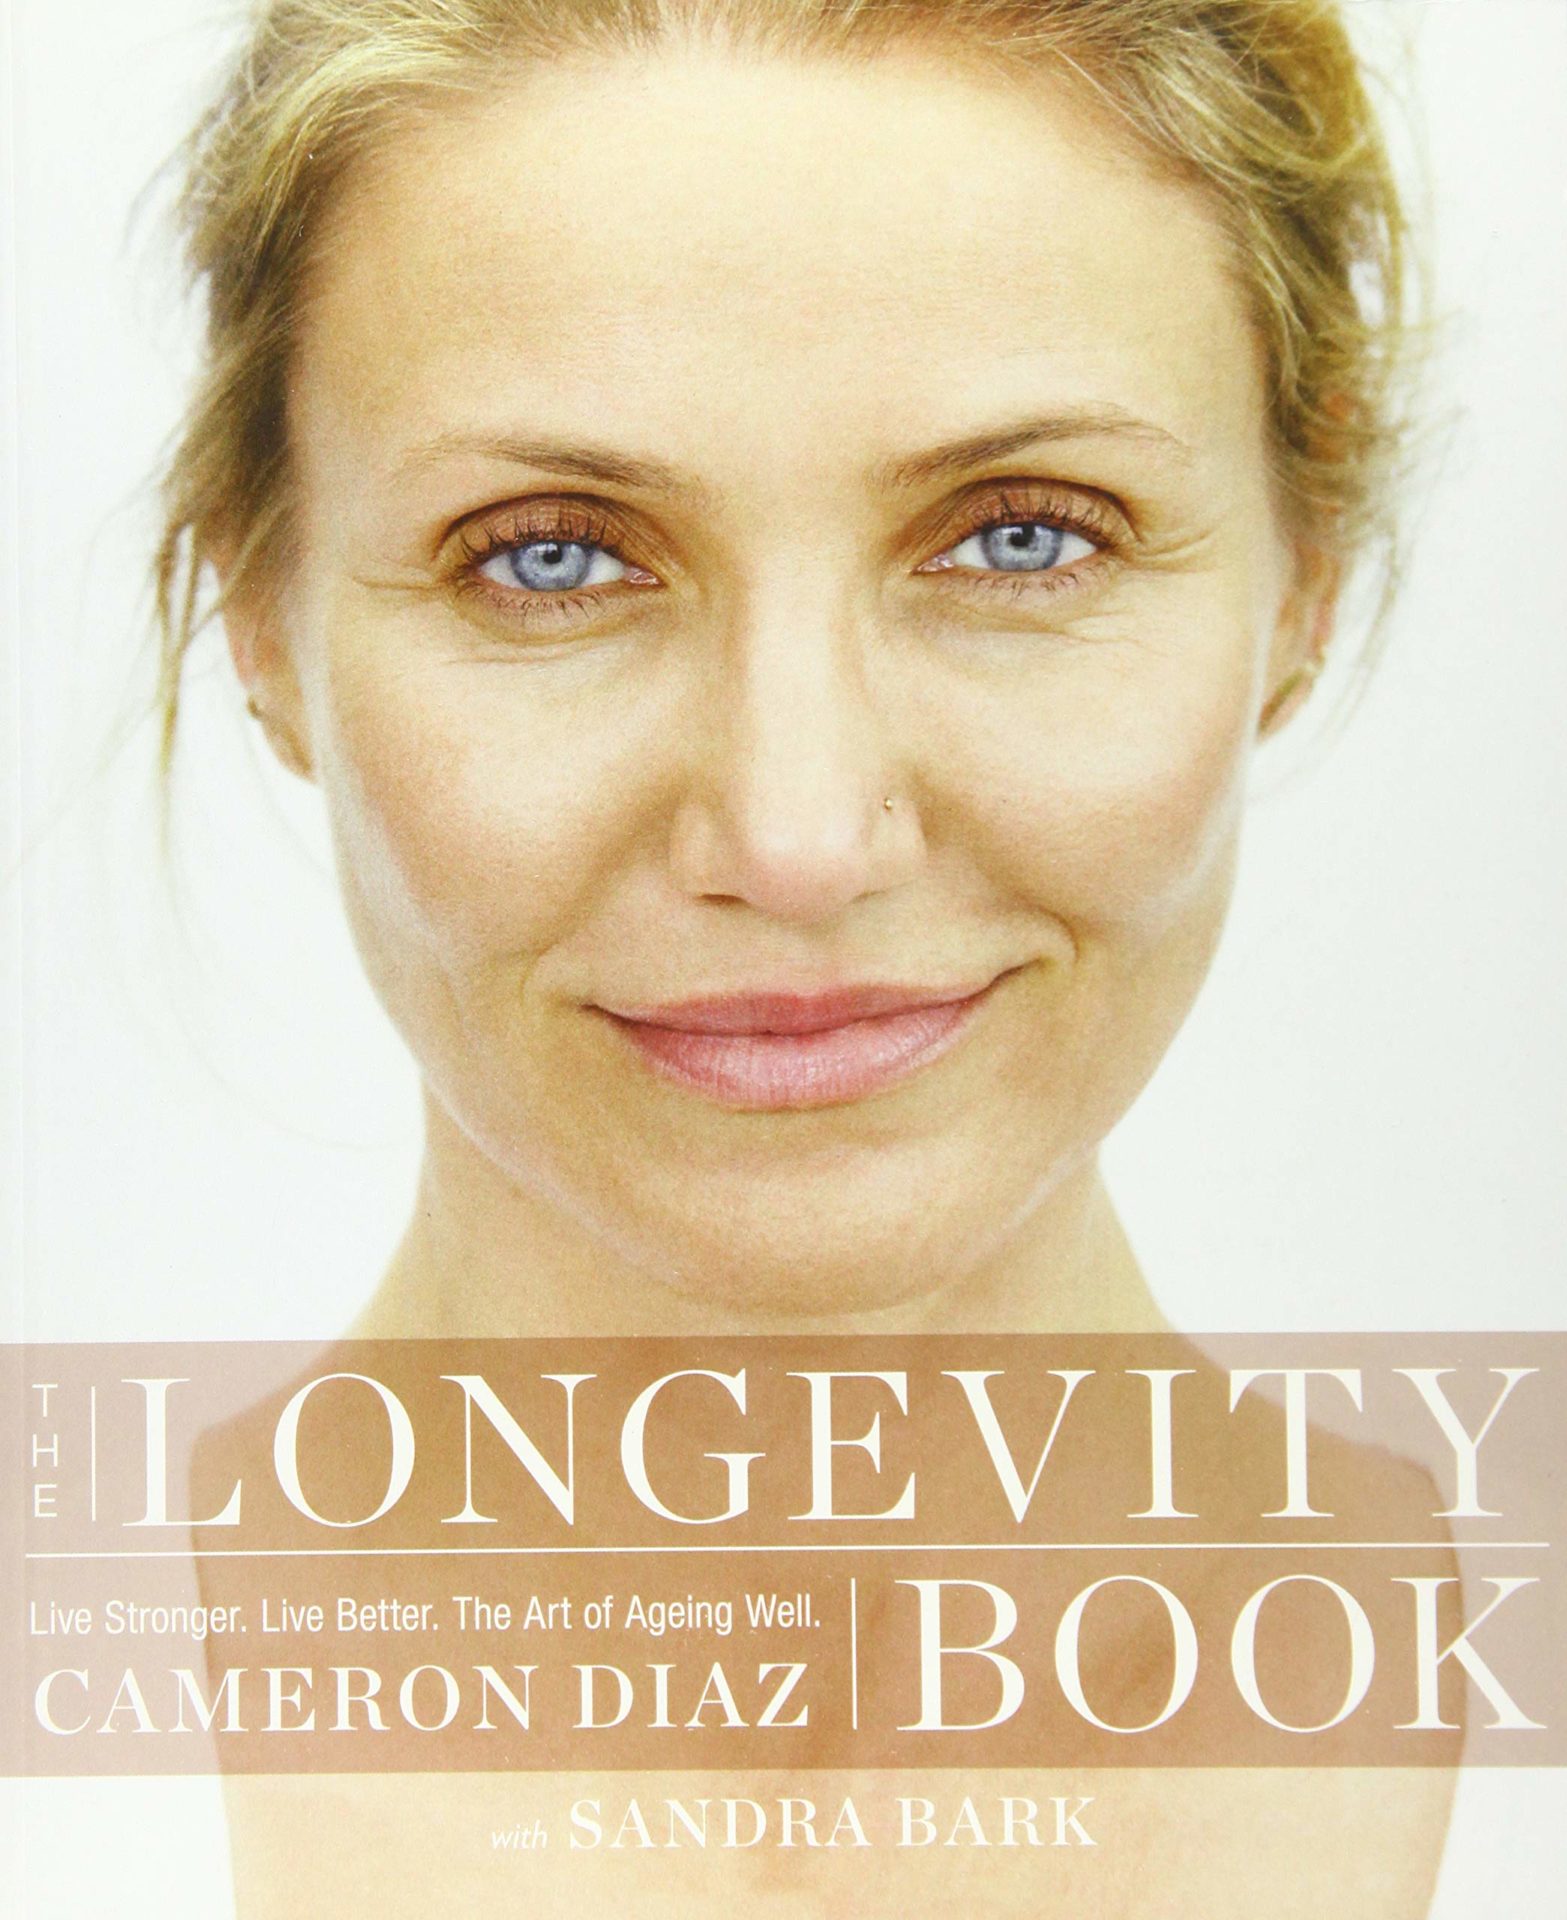 The Longevity Book by Sandra Bark and Cameron Diaz